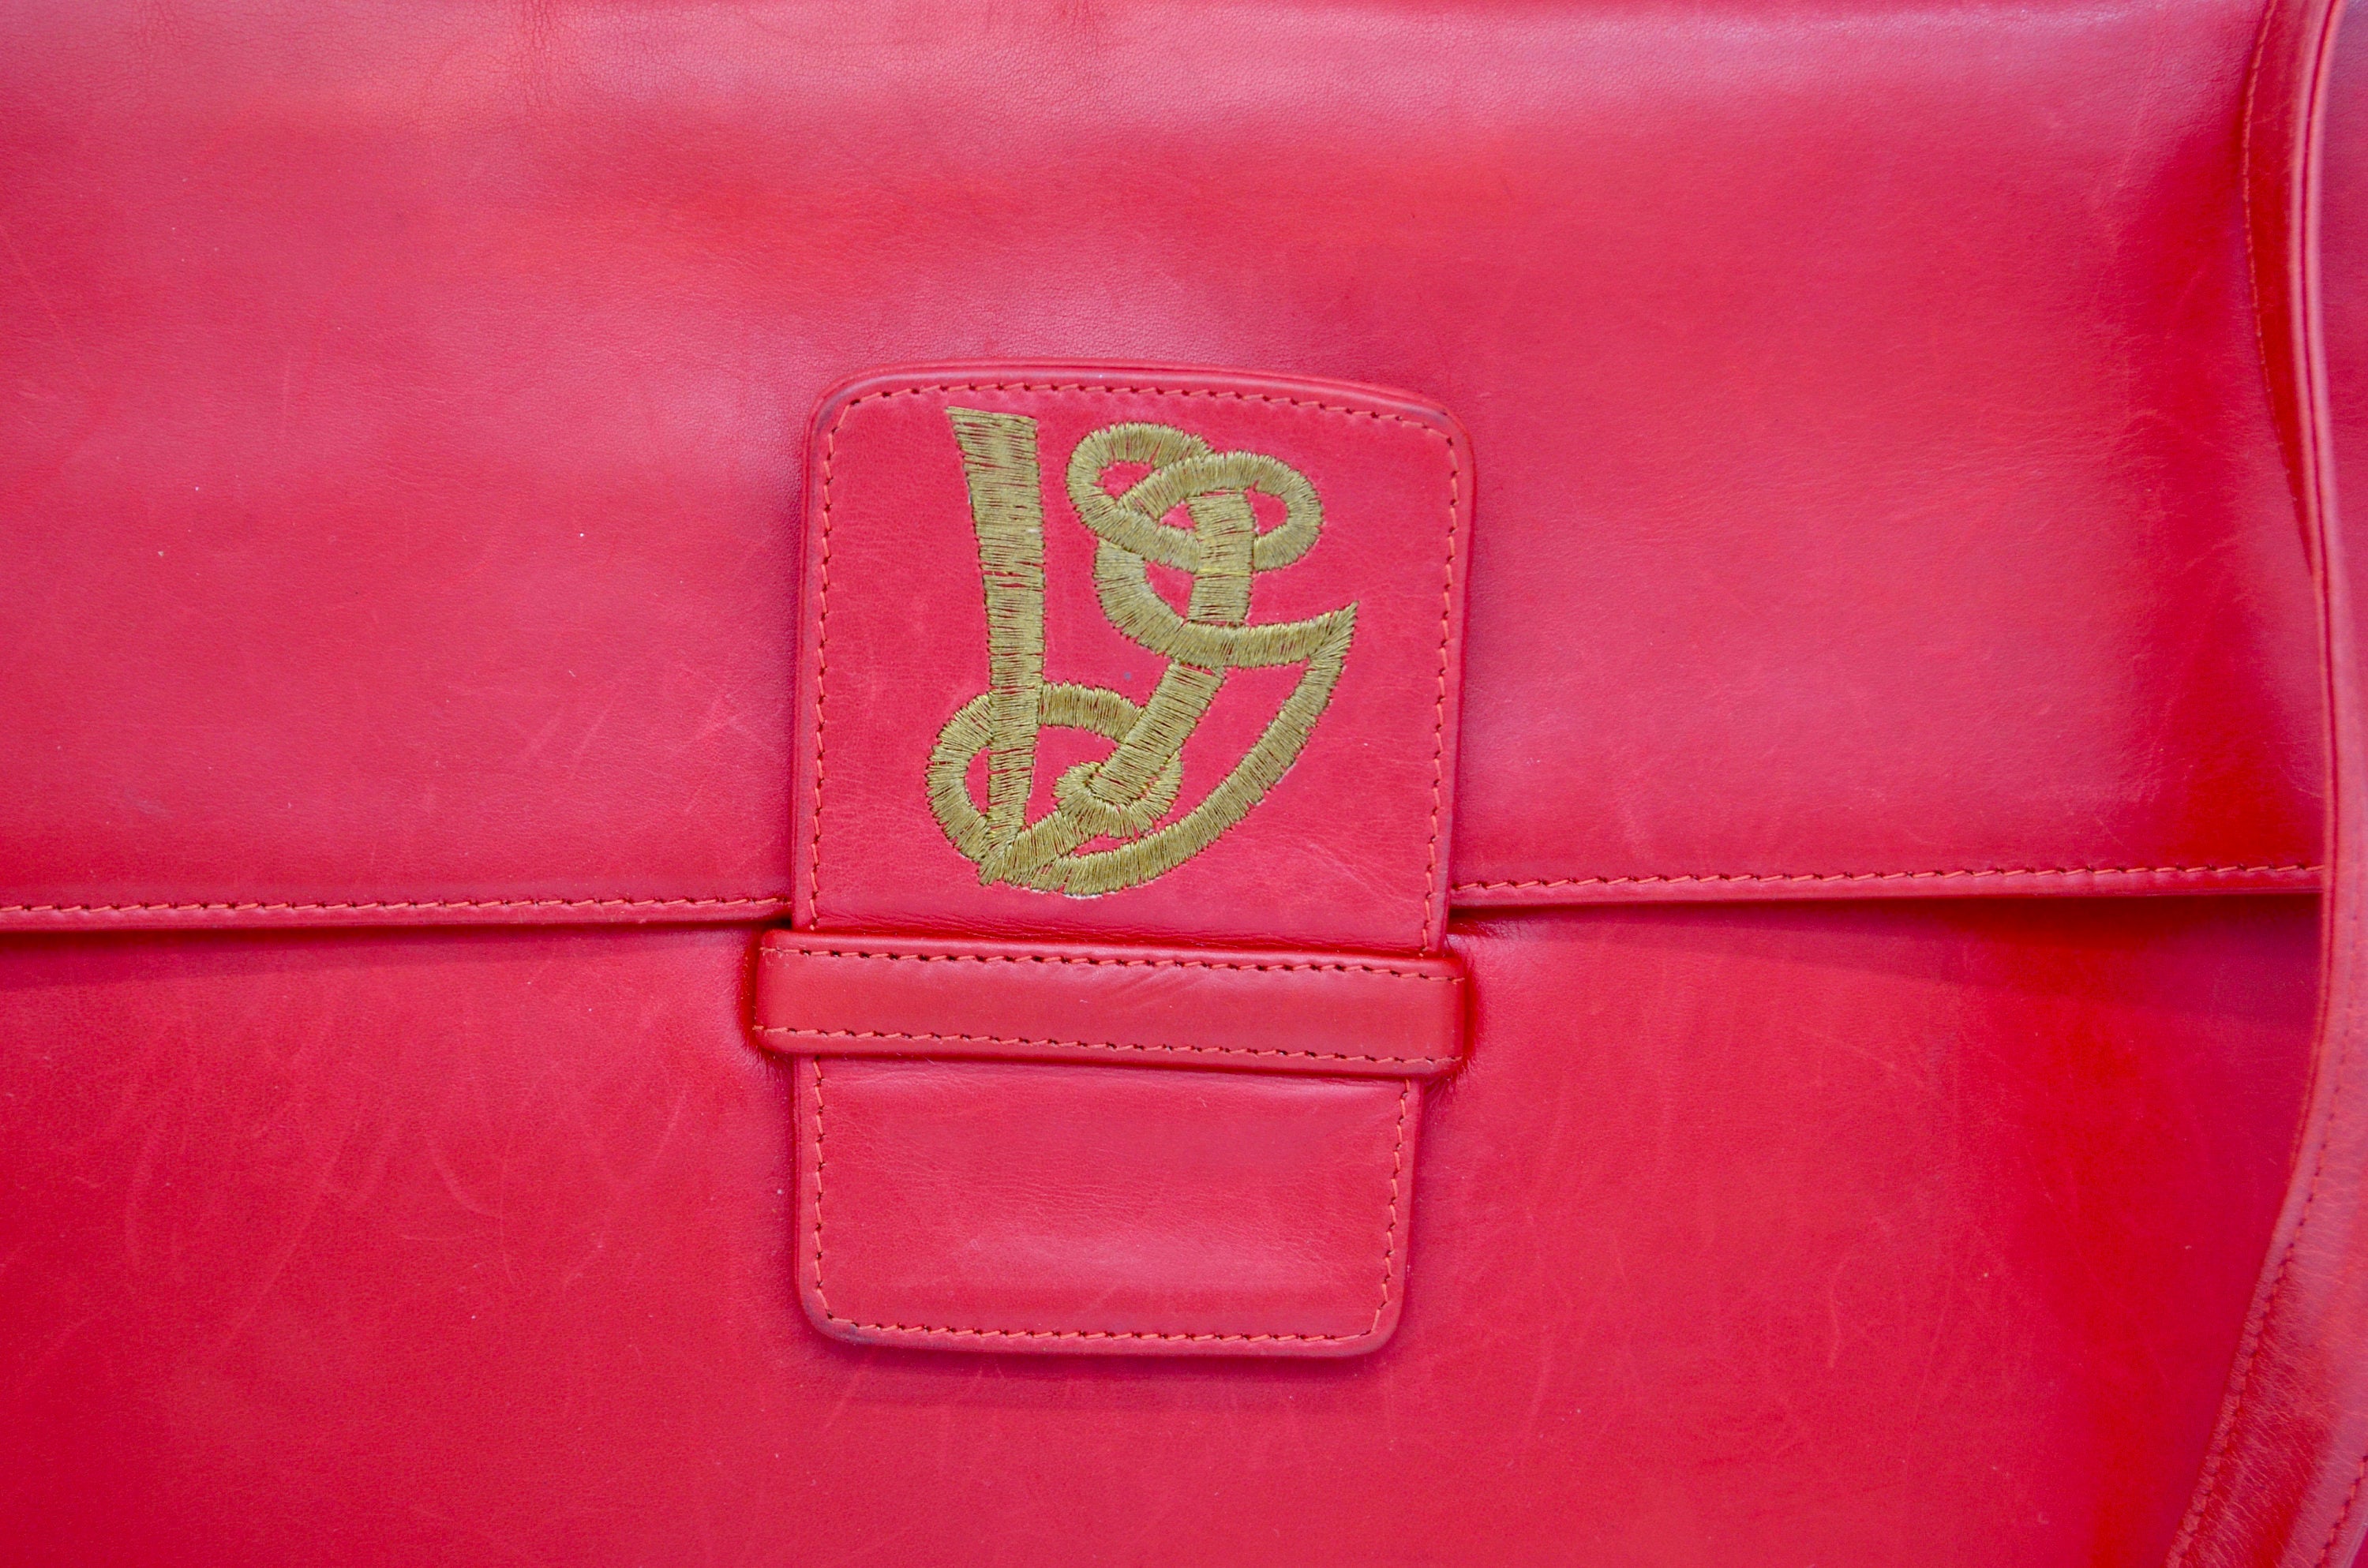 1990S Valentino Garavani Genuine Red Vibrant Leather Oversized Clutch Envelope Shoulderbag Vg